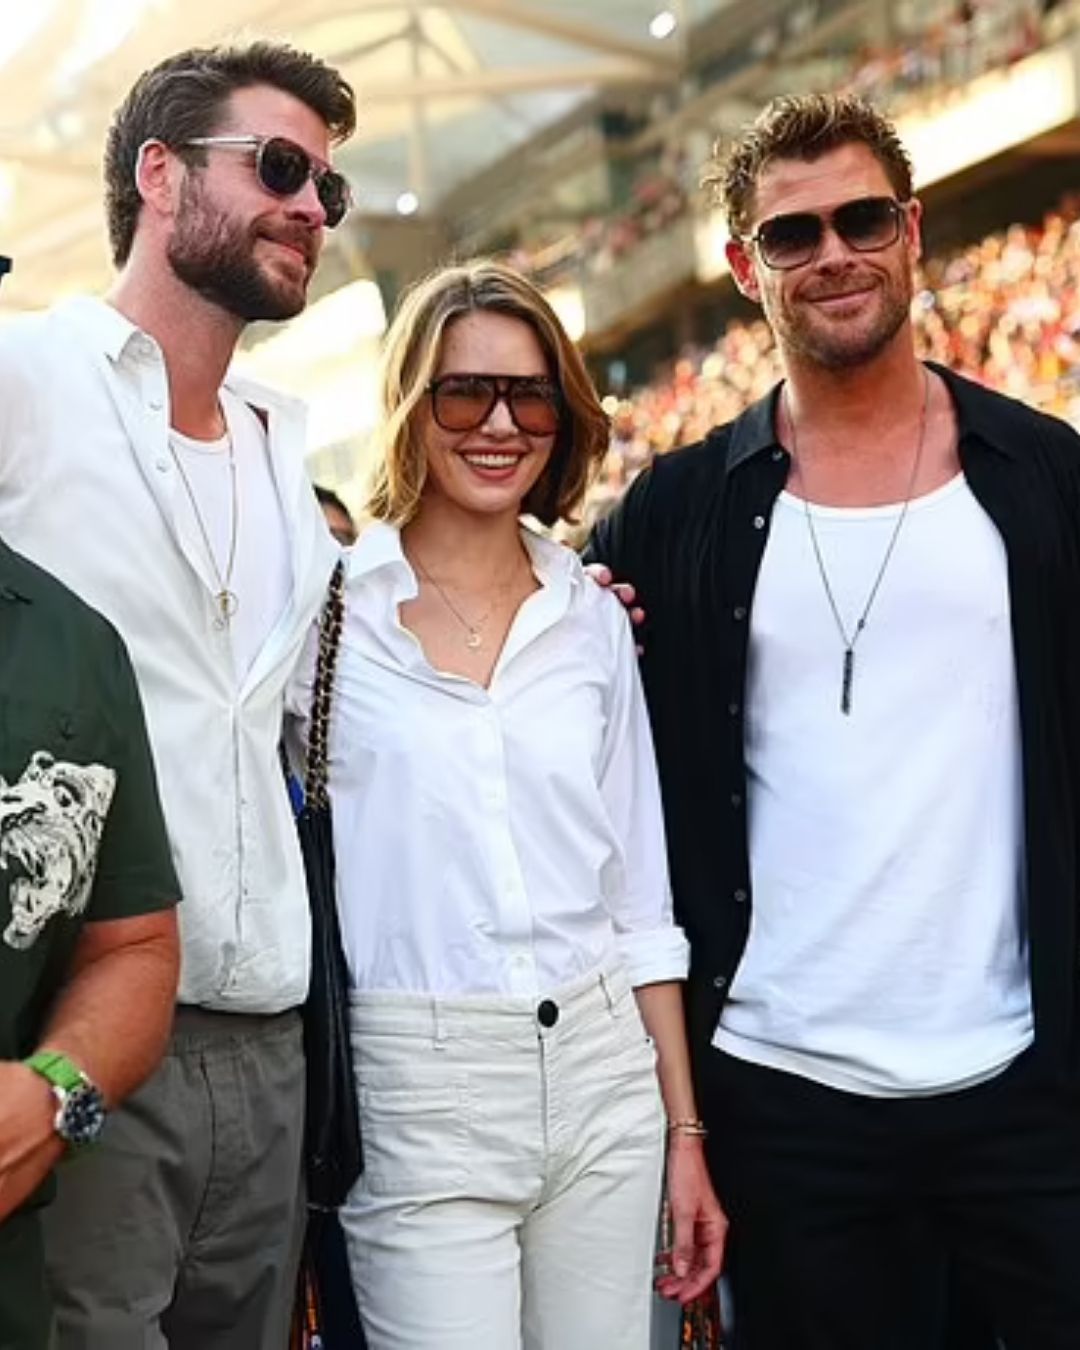 Chris Hemsworth and liam Hemsworth - Celebs at F1